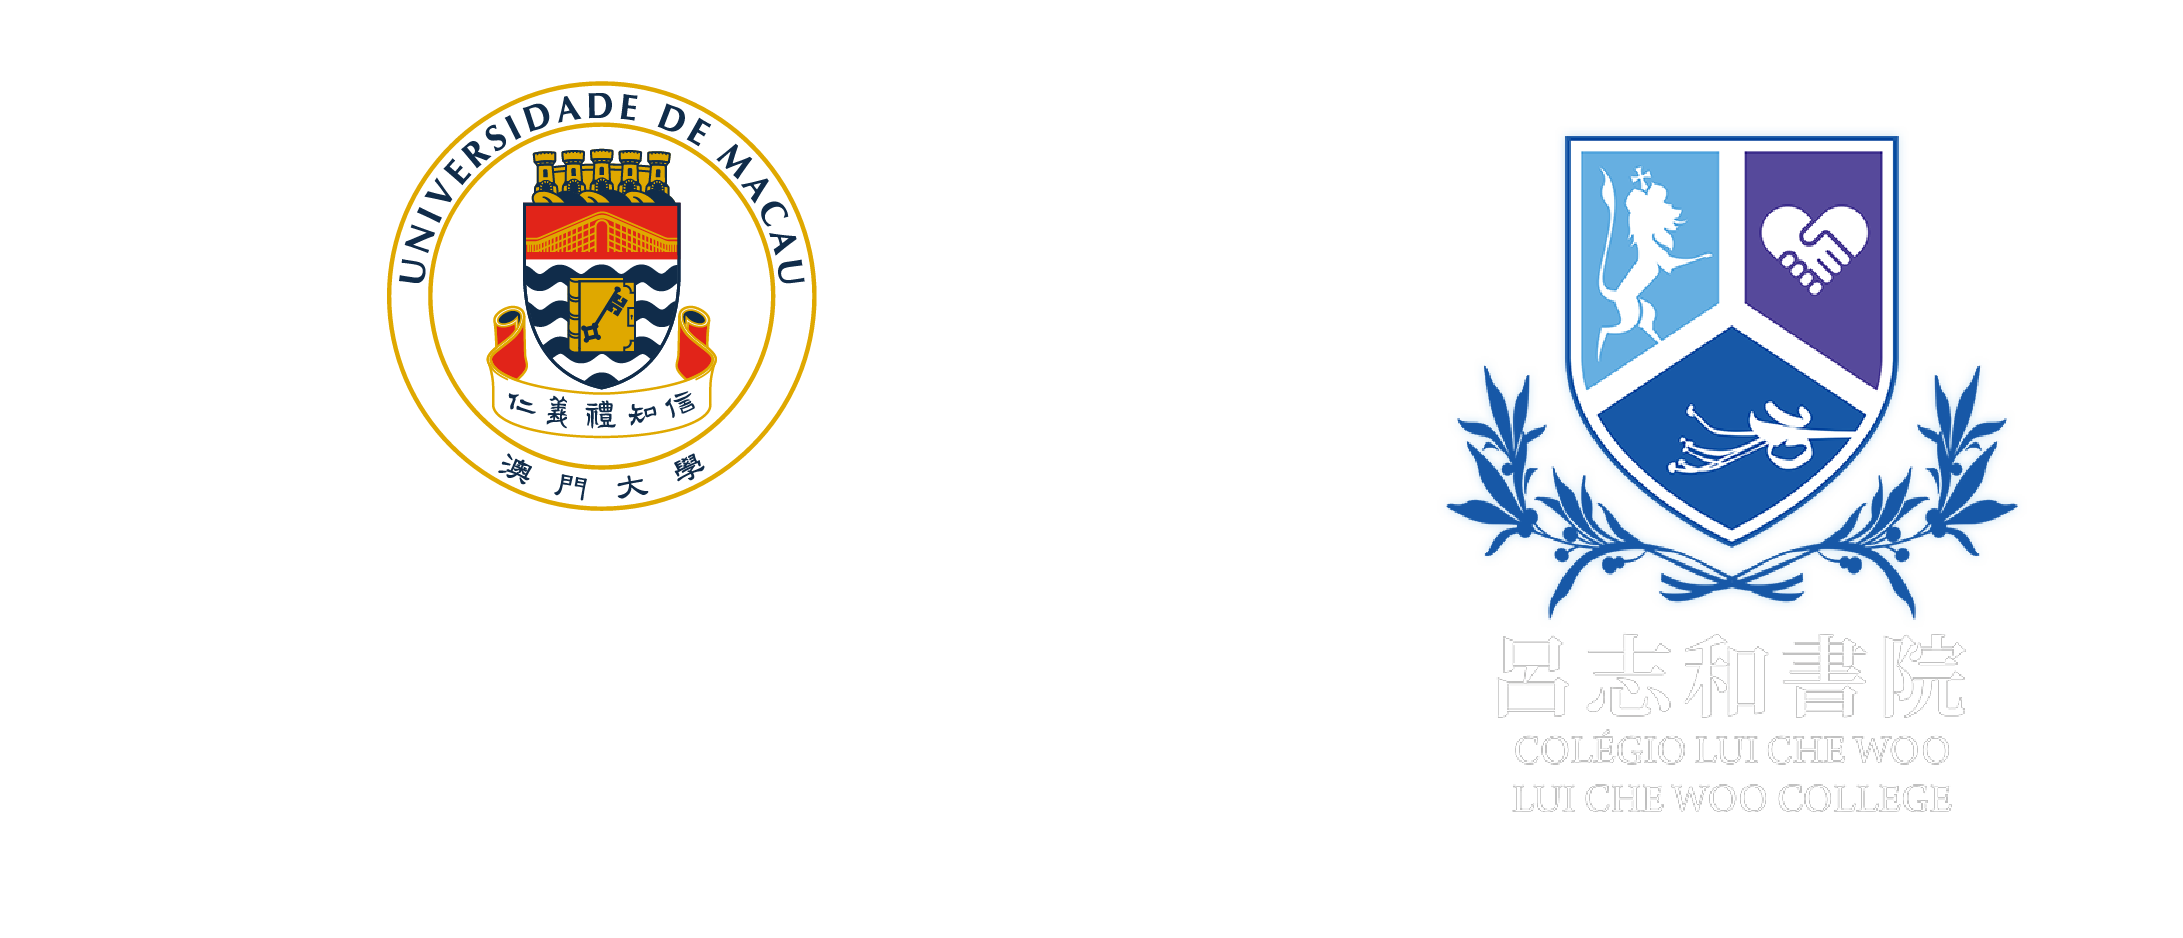 Lui Che Woo College | University of Macau Logo